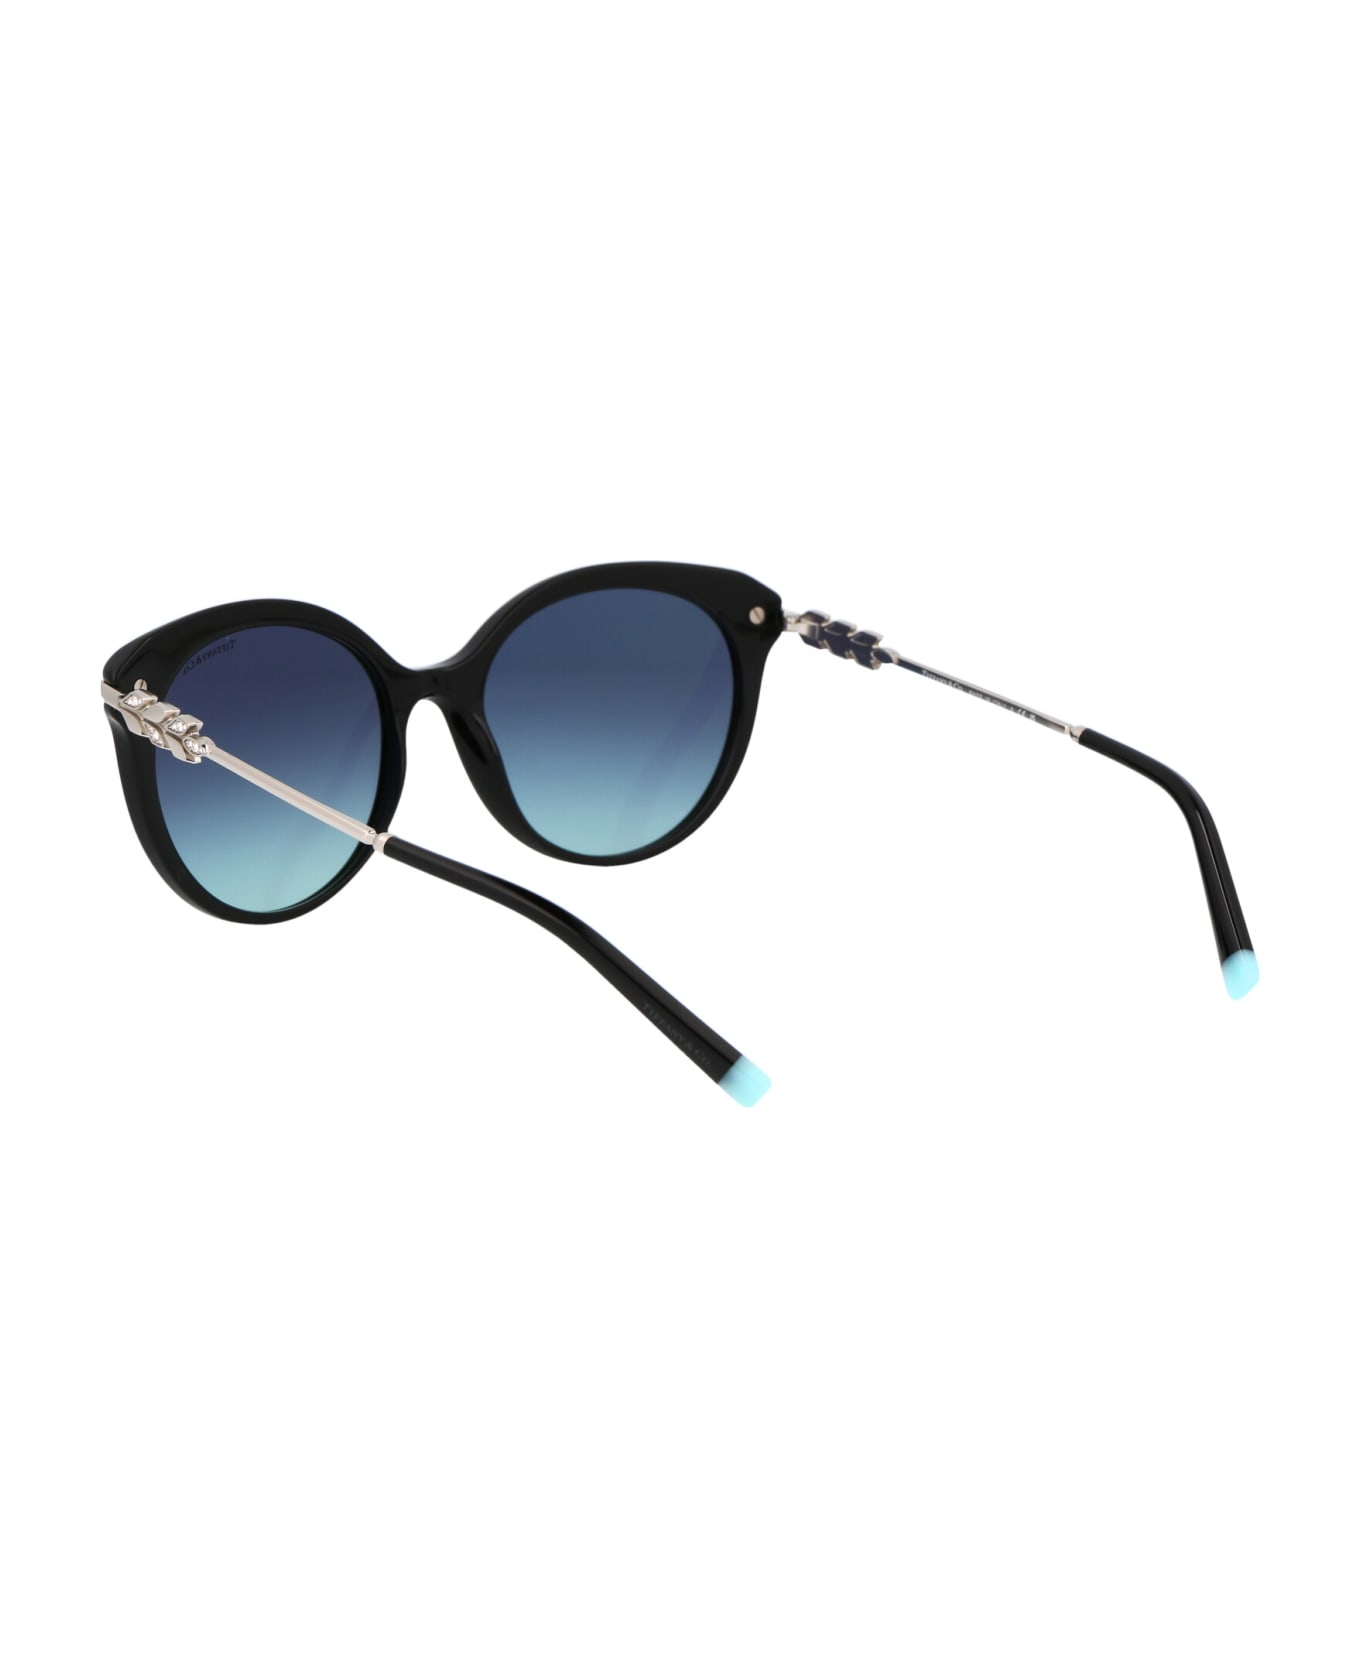 Tiffany & Co. 0tf4189b Sunglasses - 80019S Black サングラス